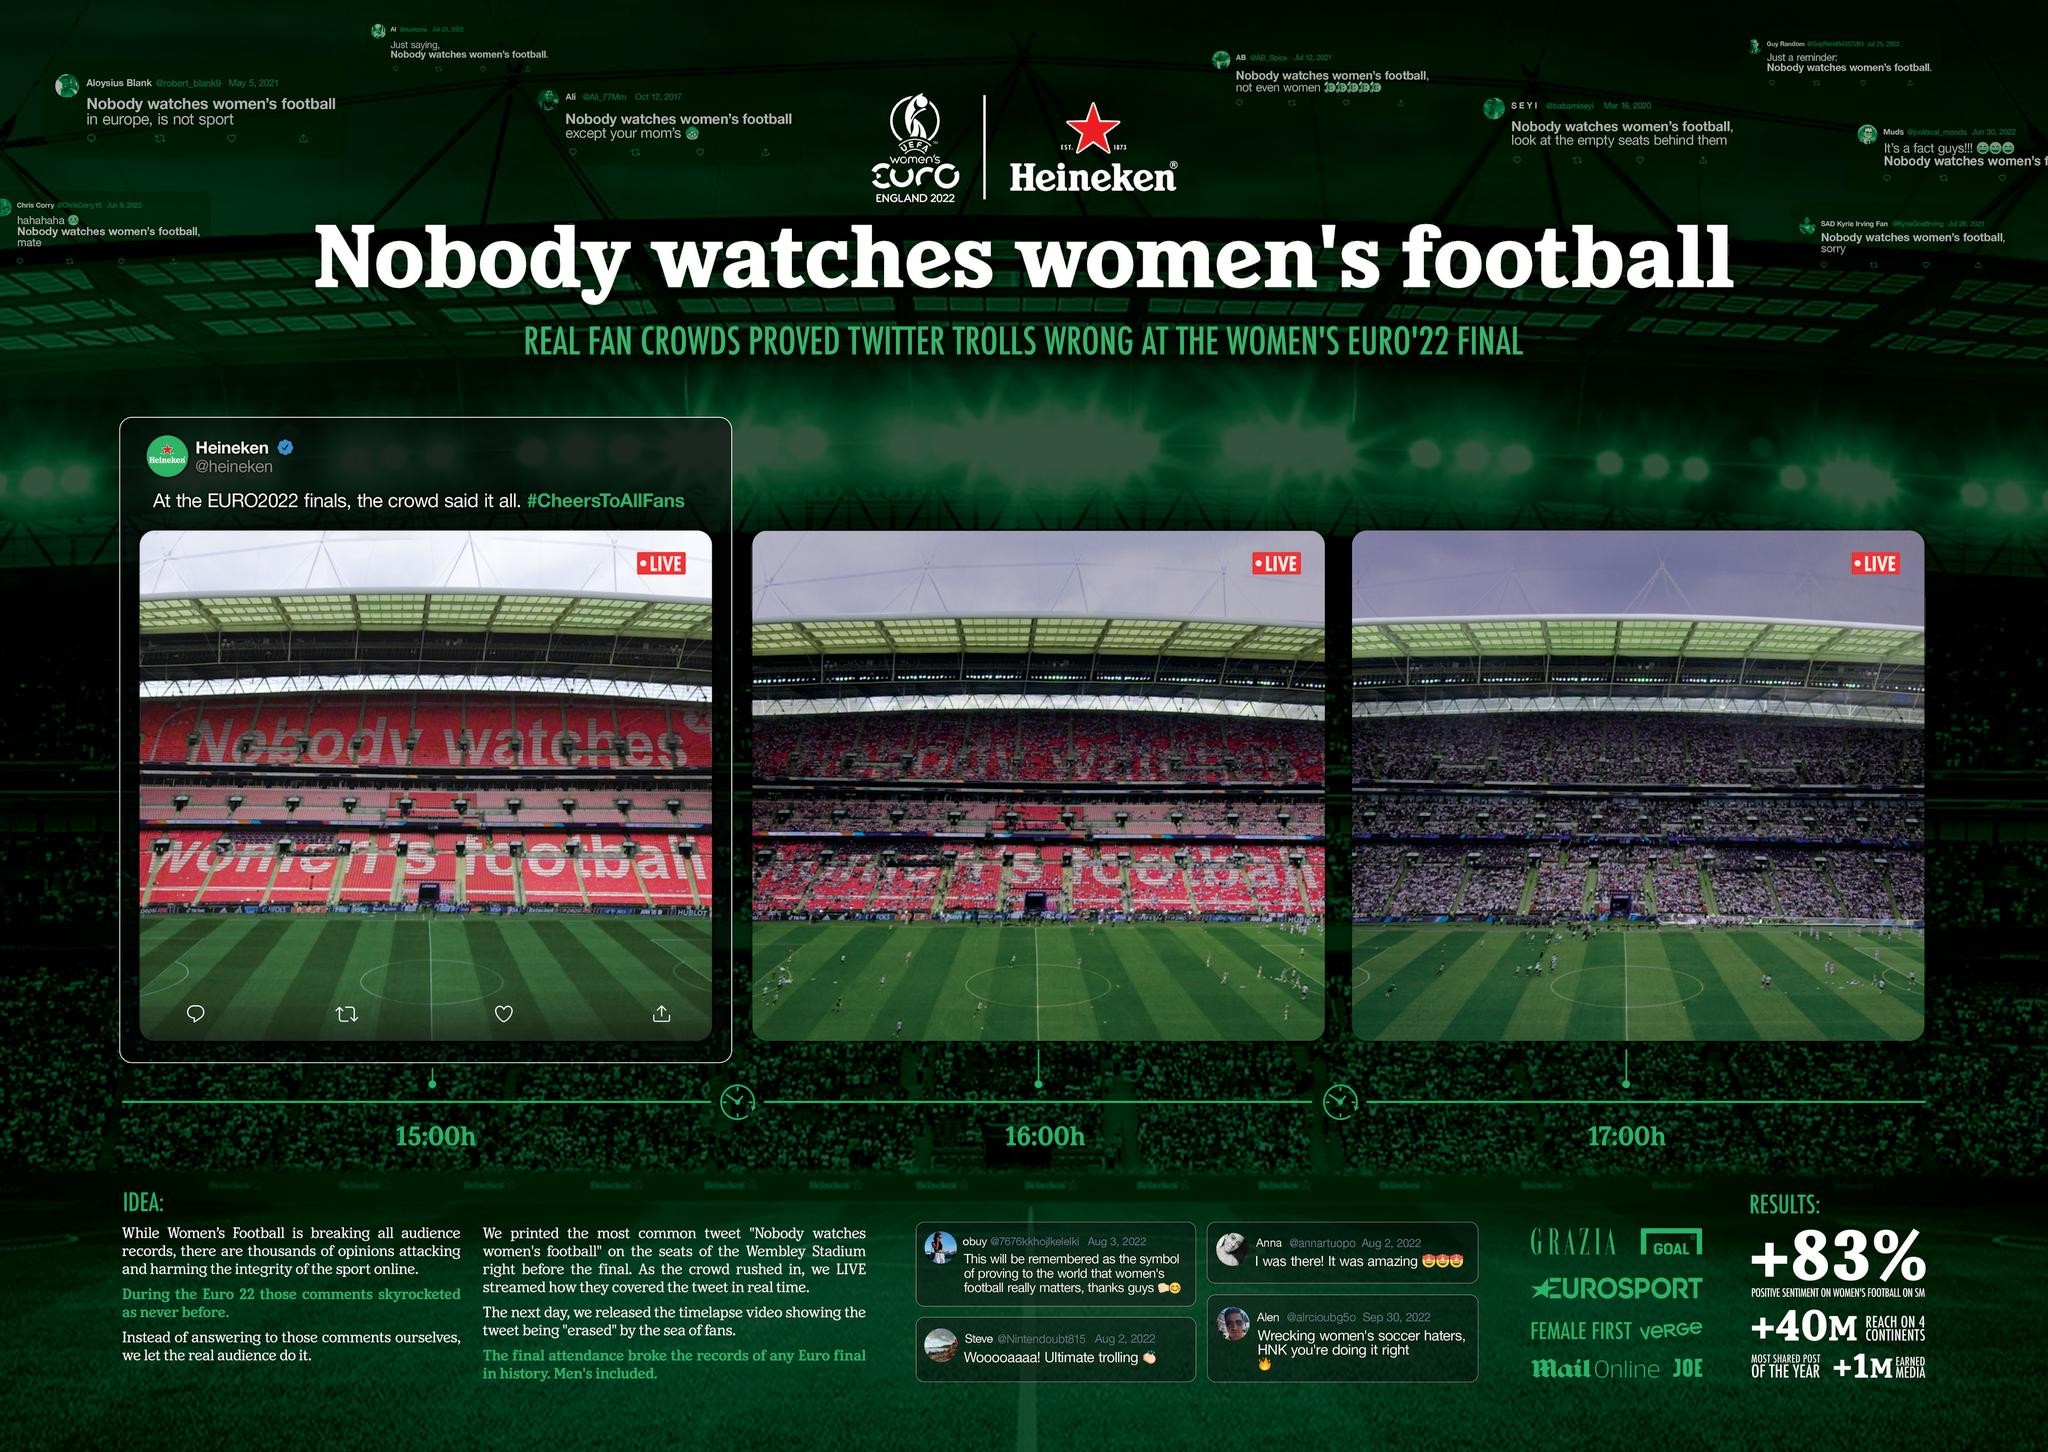 NOBODY WATCHES WOMEN FOOTBALL